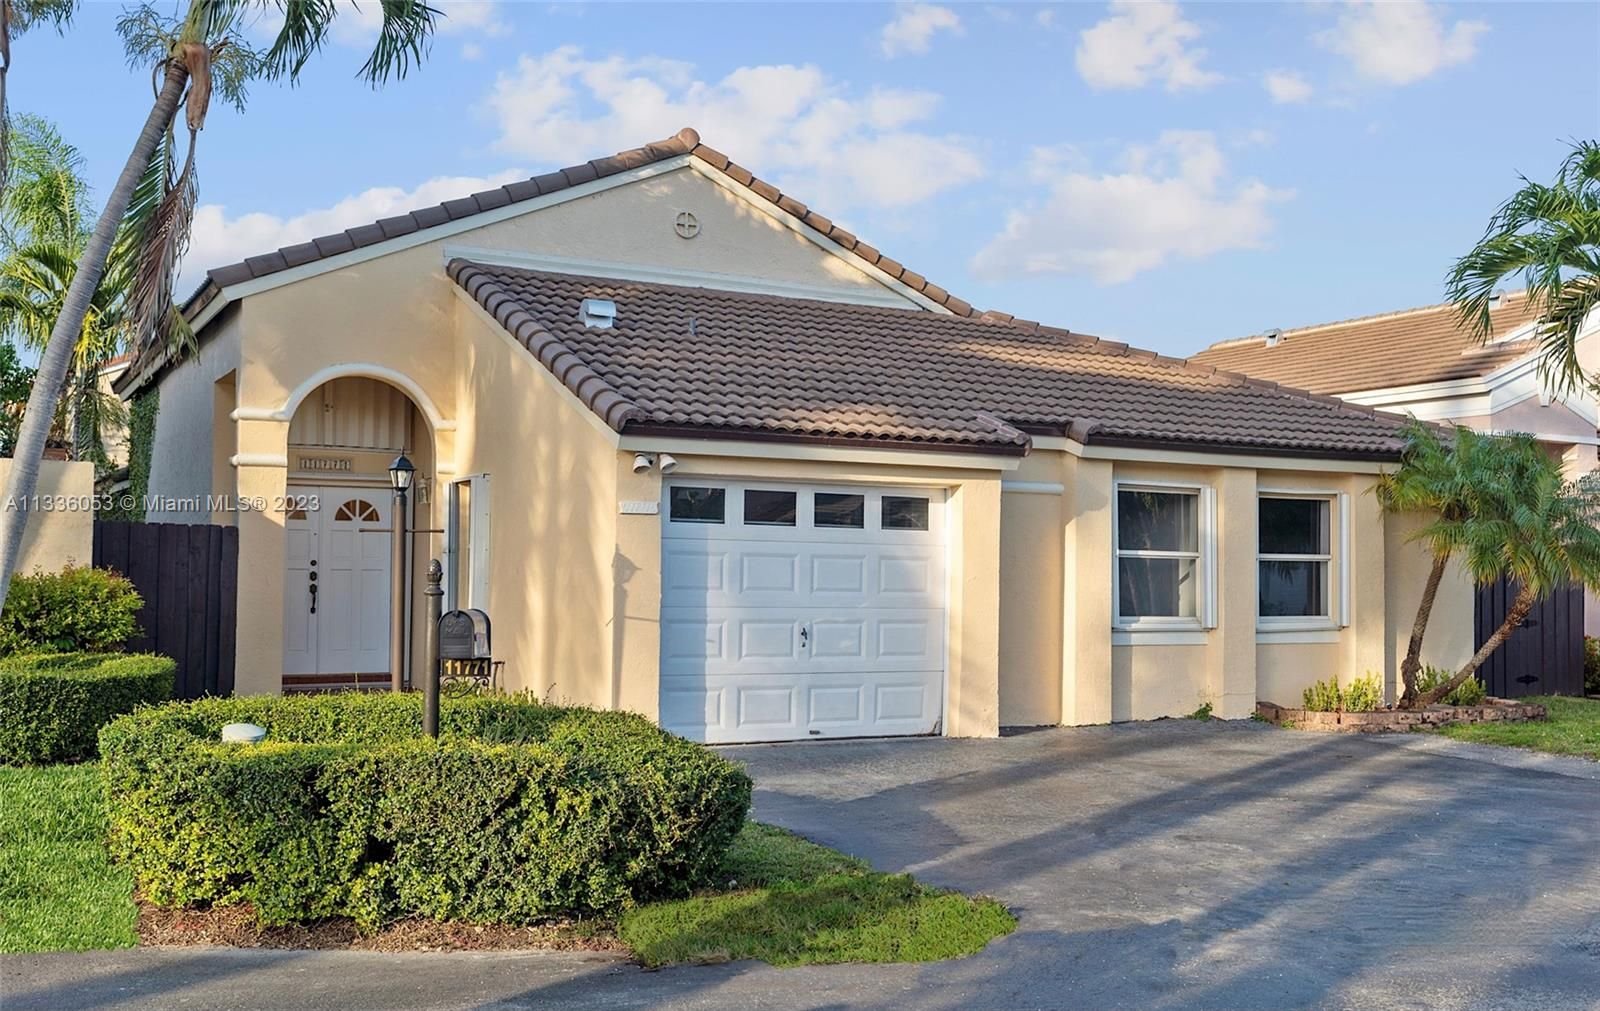 Real estate property located at 11771 94th St, Miami-Dade County, Miami, FL